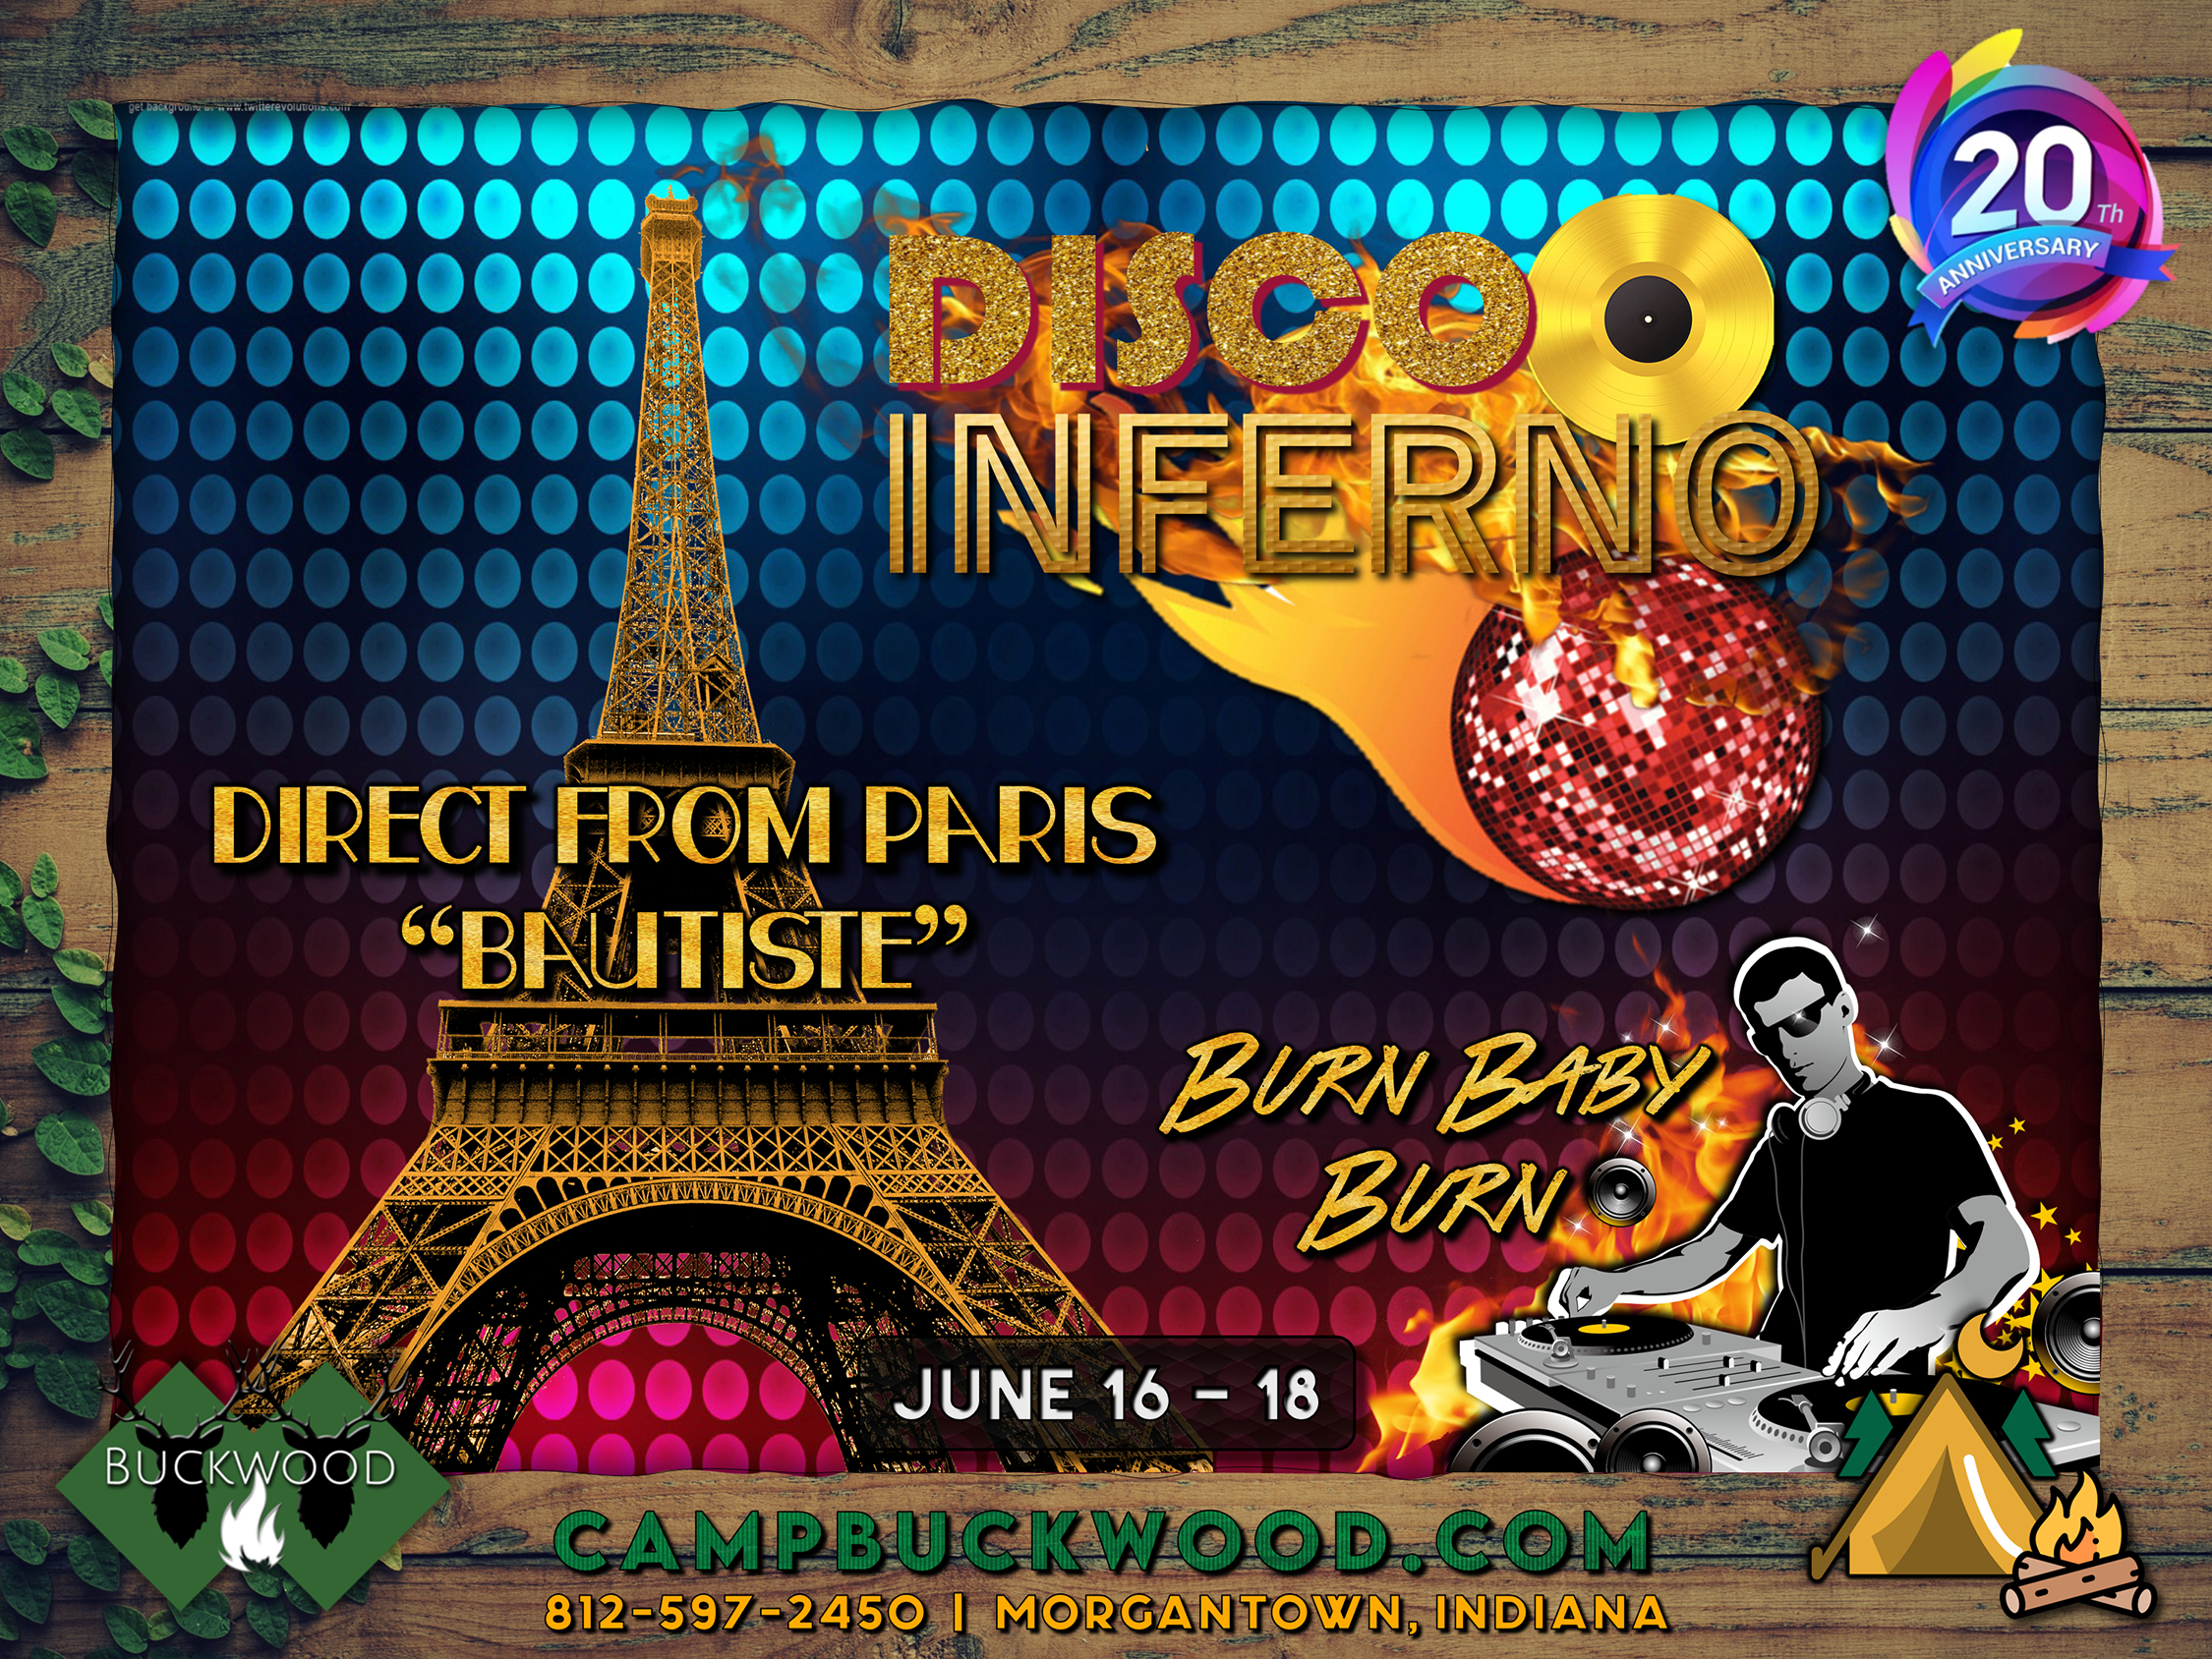 Camp Buckwood Disco Inferno Weekend Event